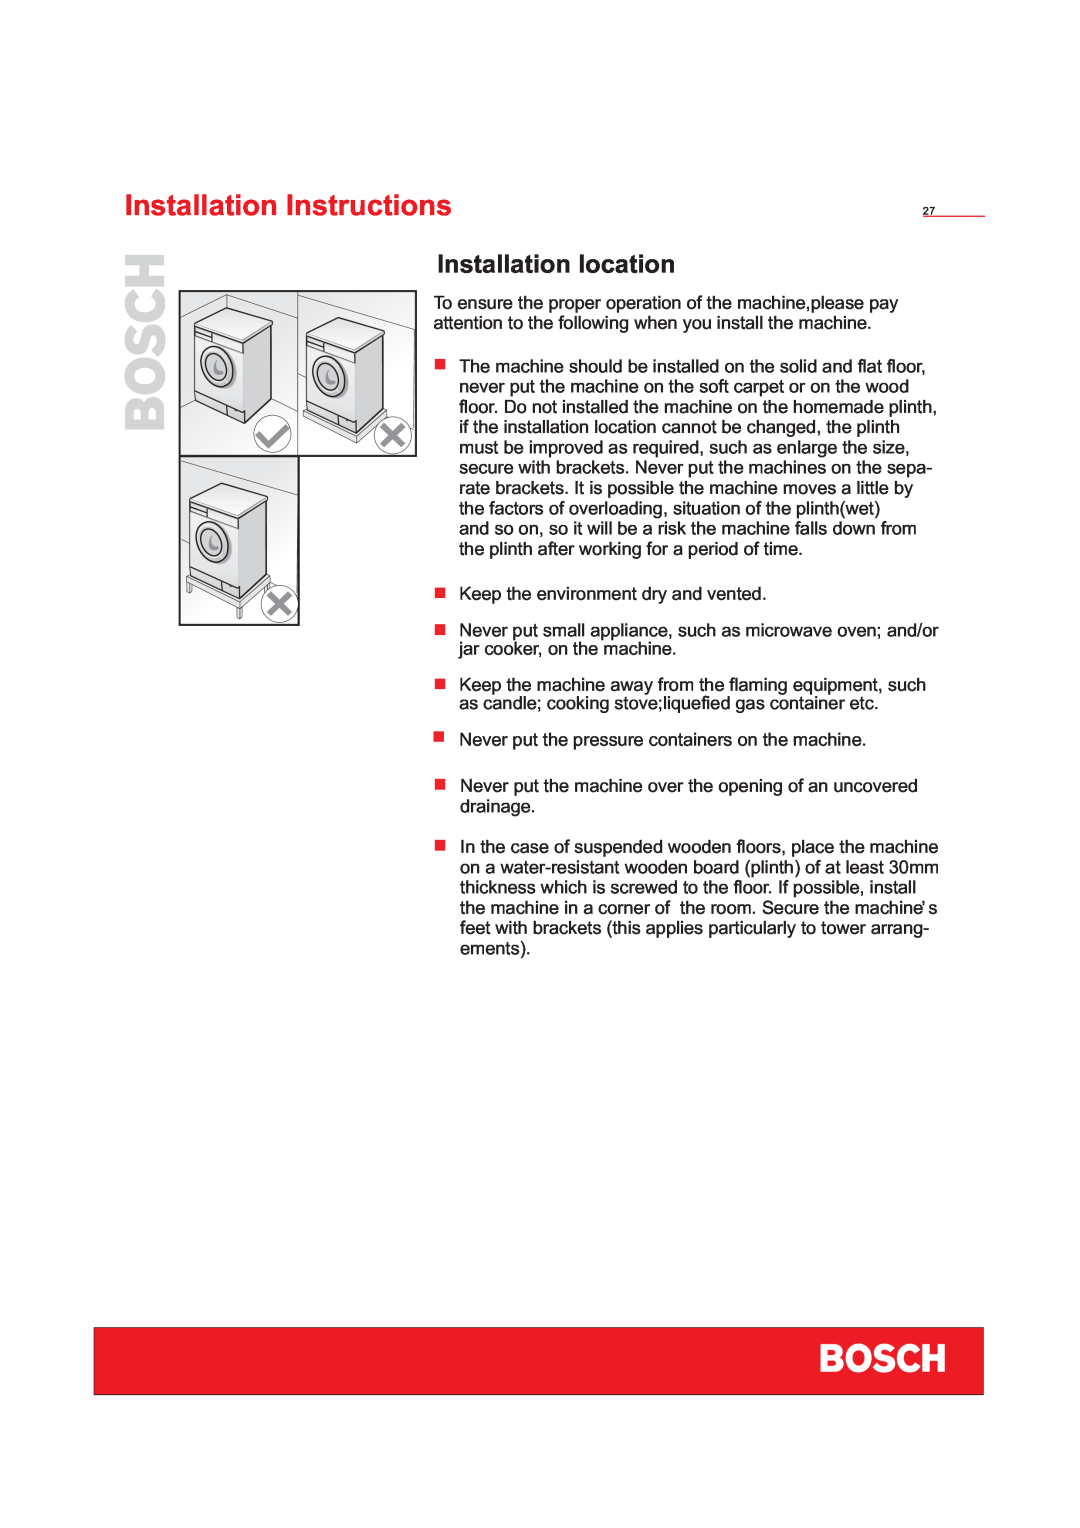 Bosch Appliances WFD50818 installation instructions Installation location, Installation Instructions 